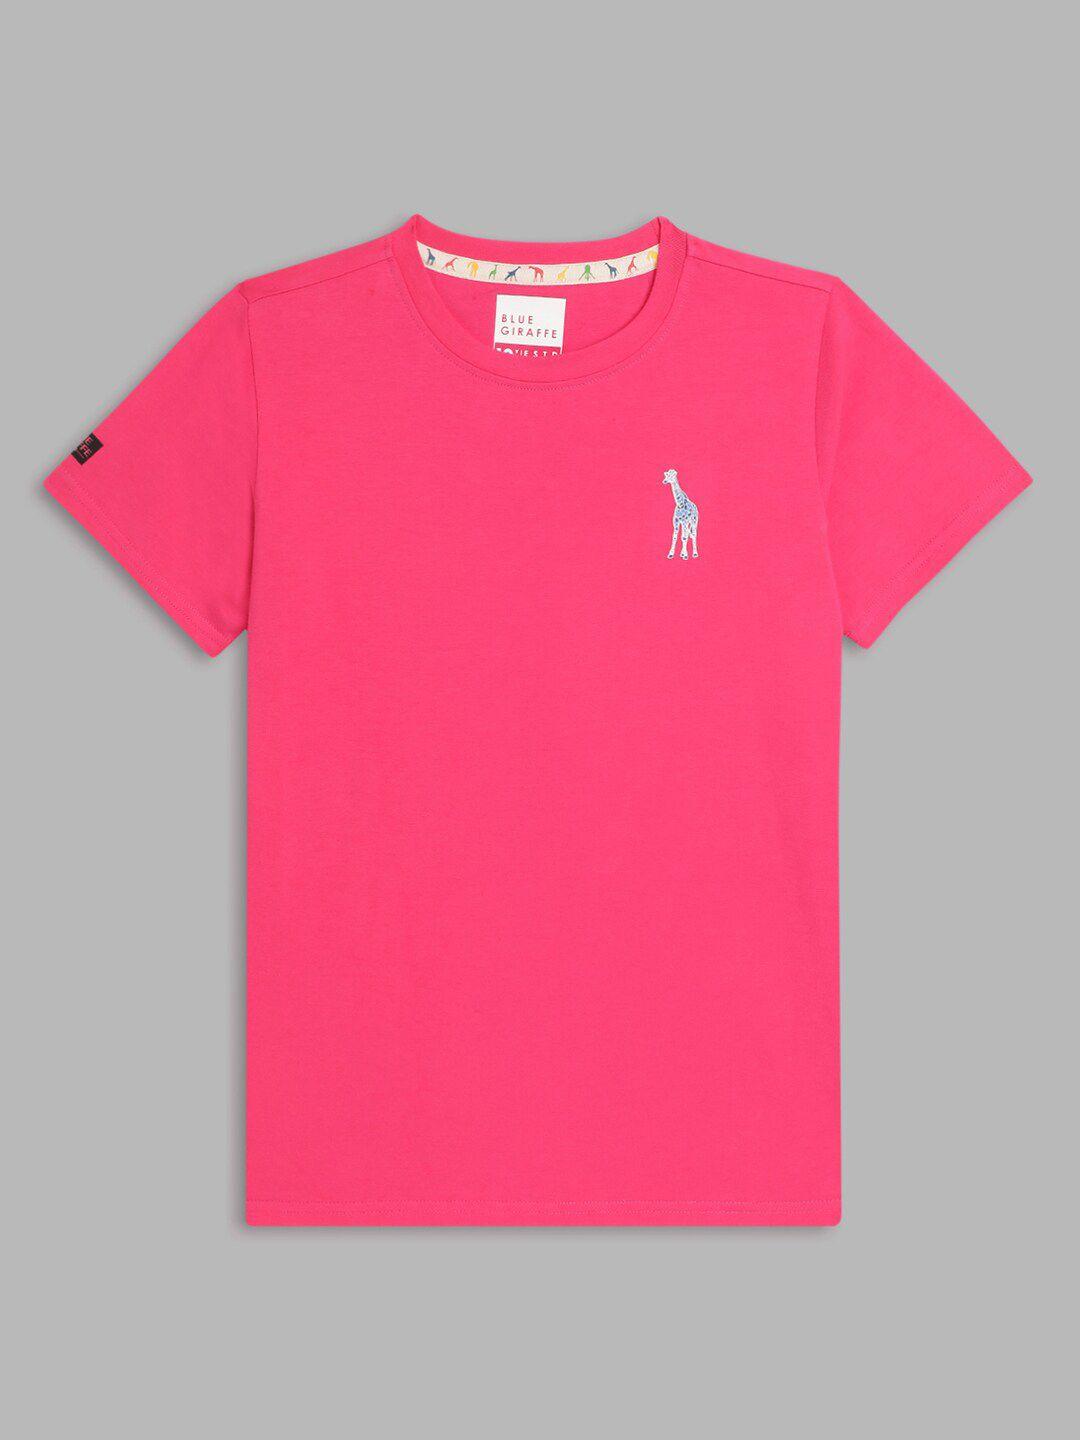 blue giraffe boys fuchsia pink cotton t-shirt